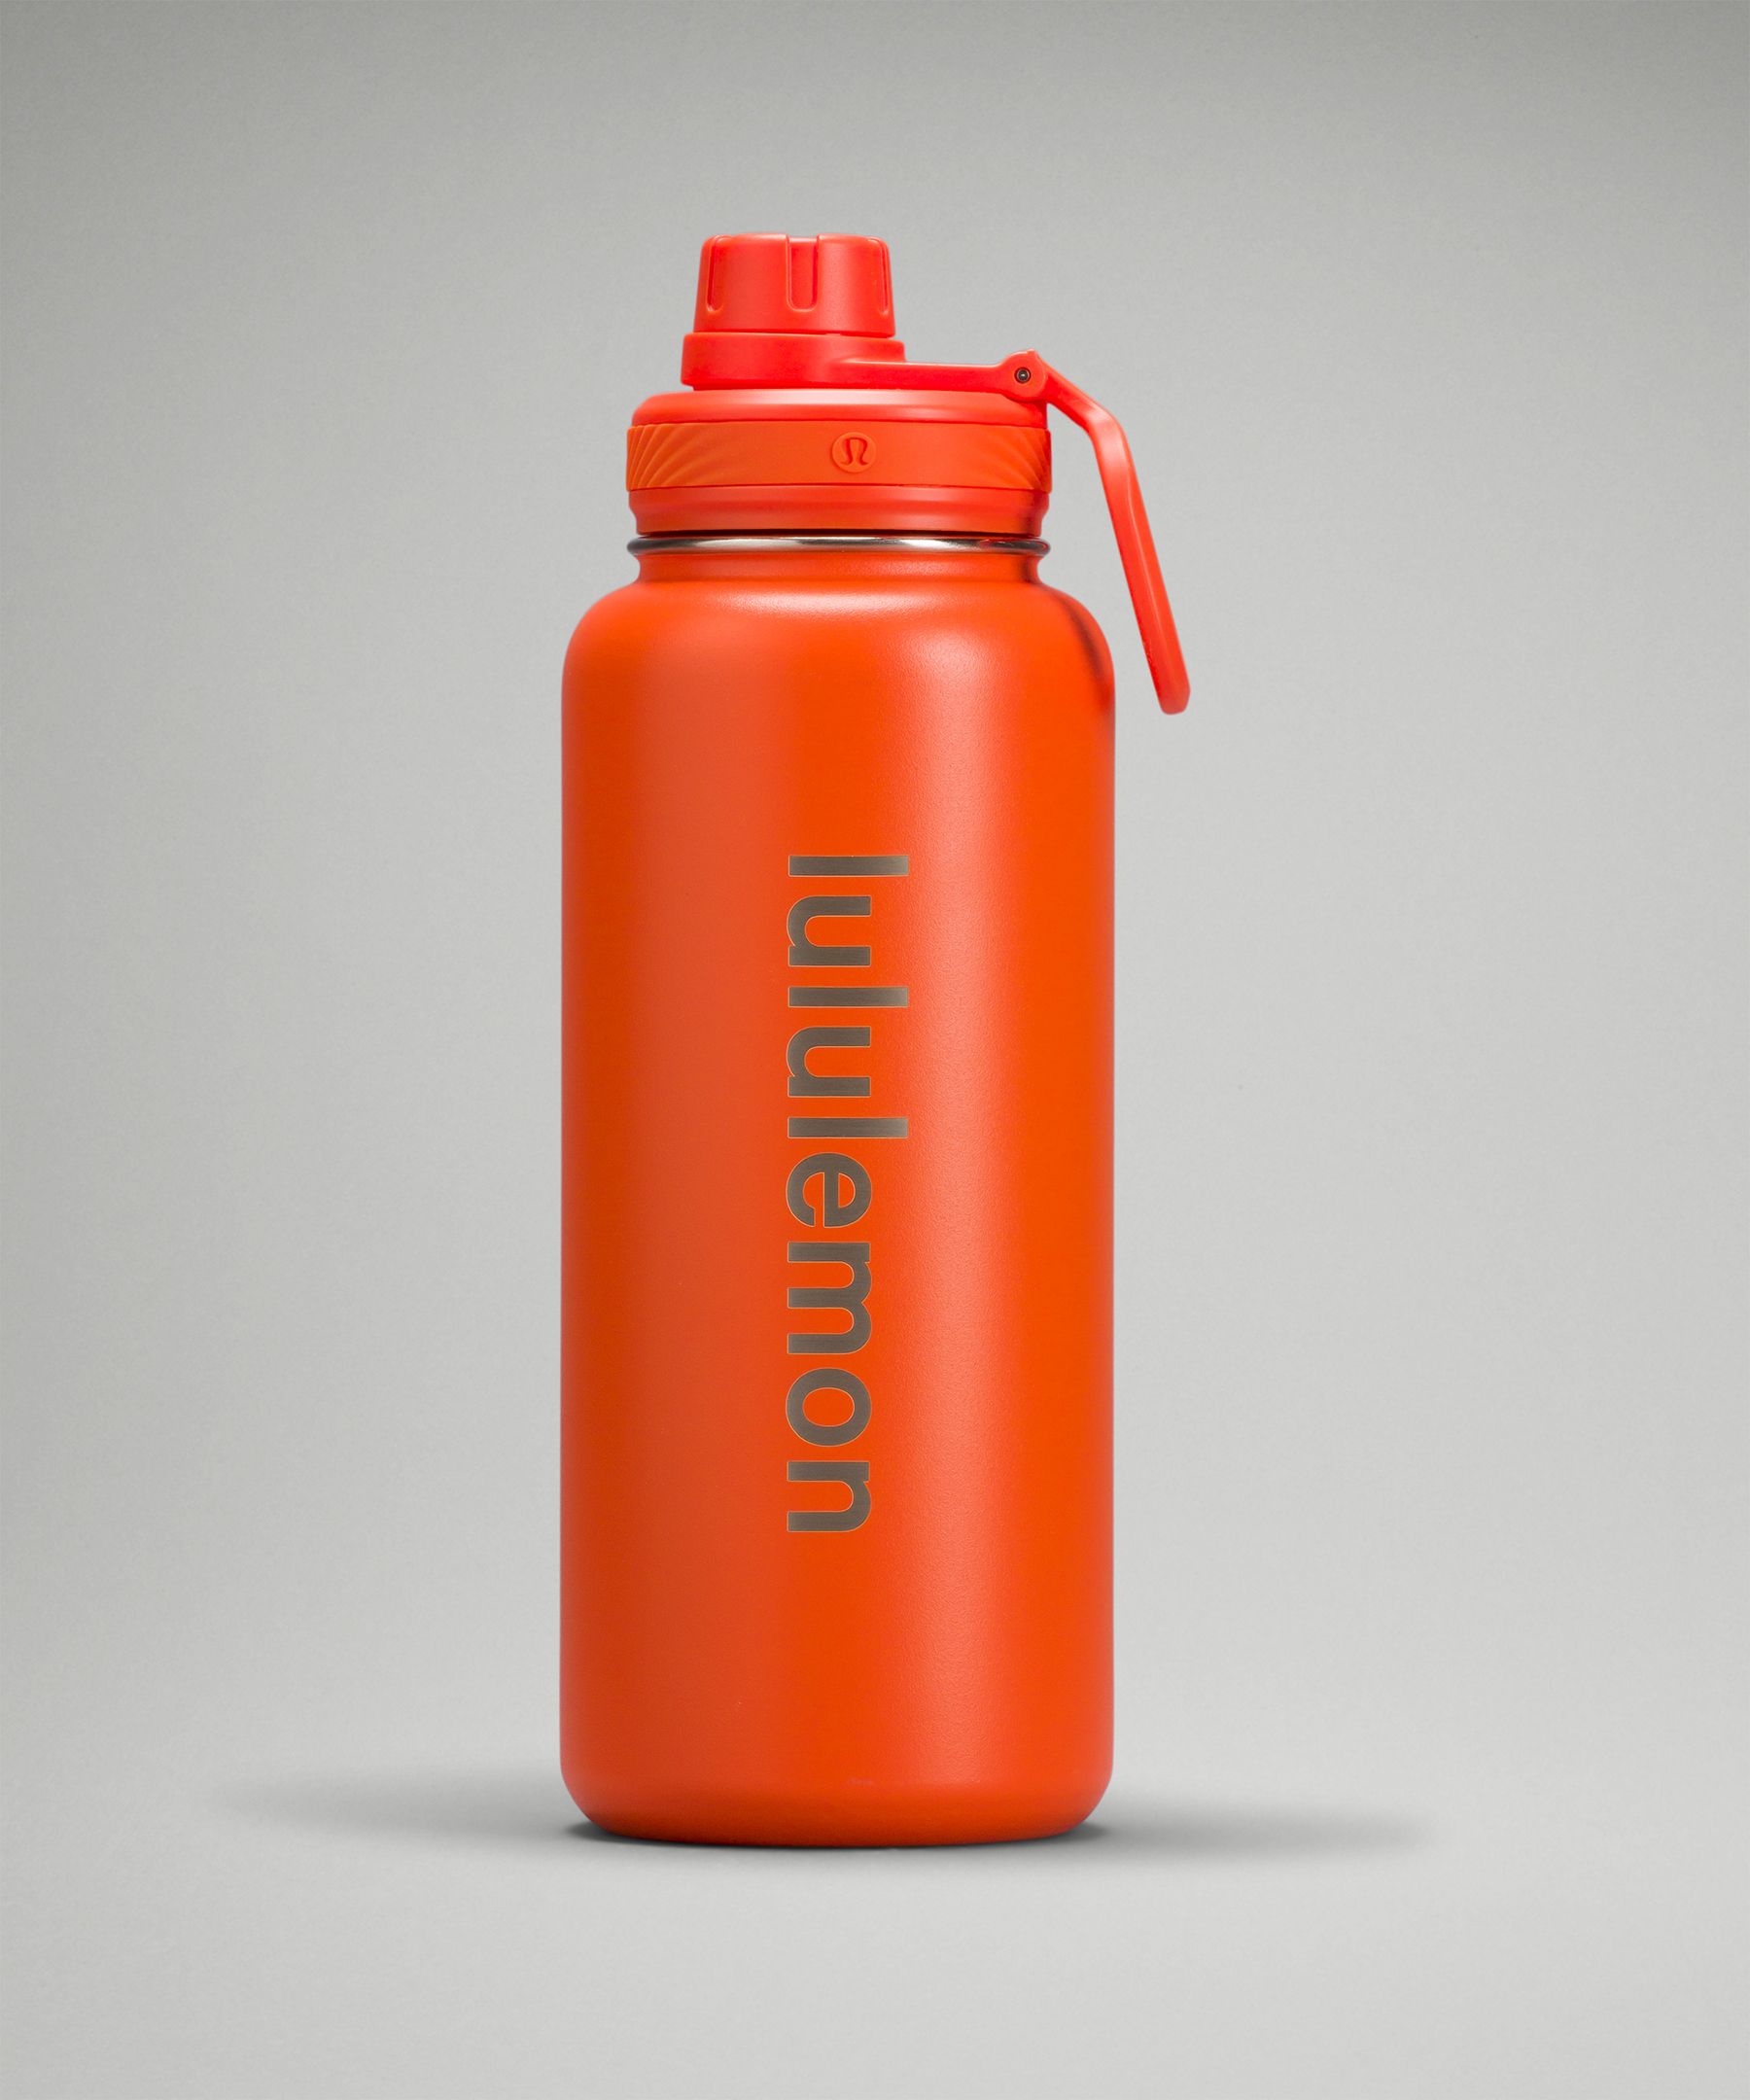 Lululemon Water Bottles Website - Rhino Grey Back to Life Sport